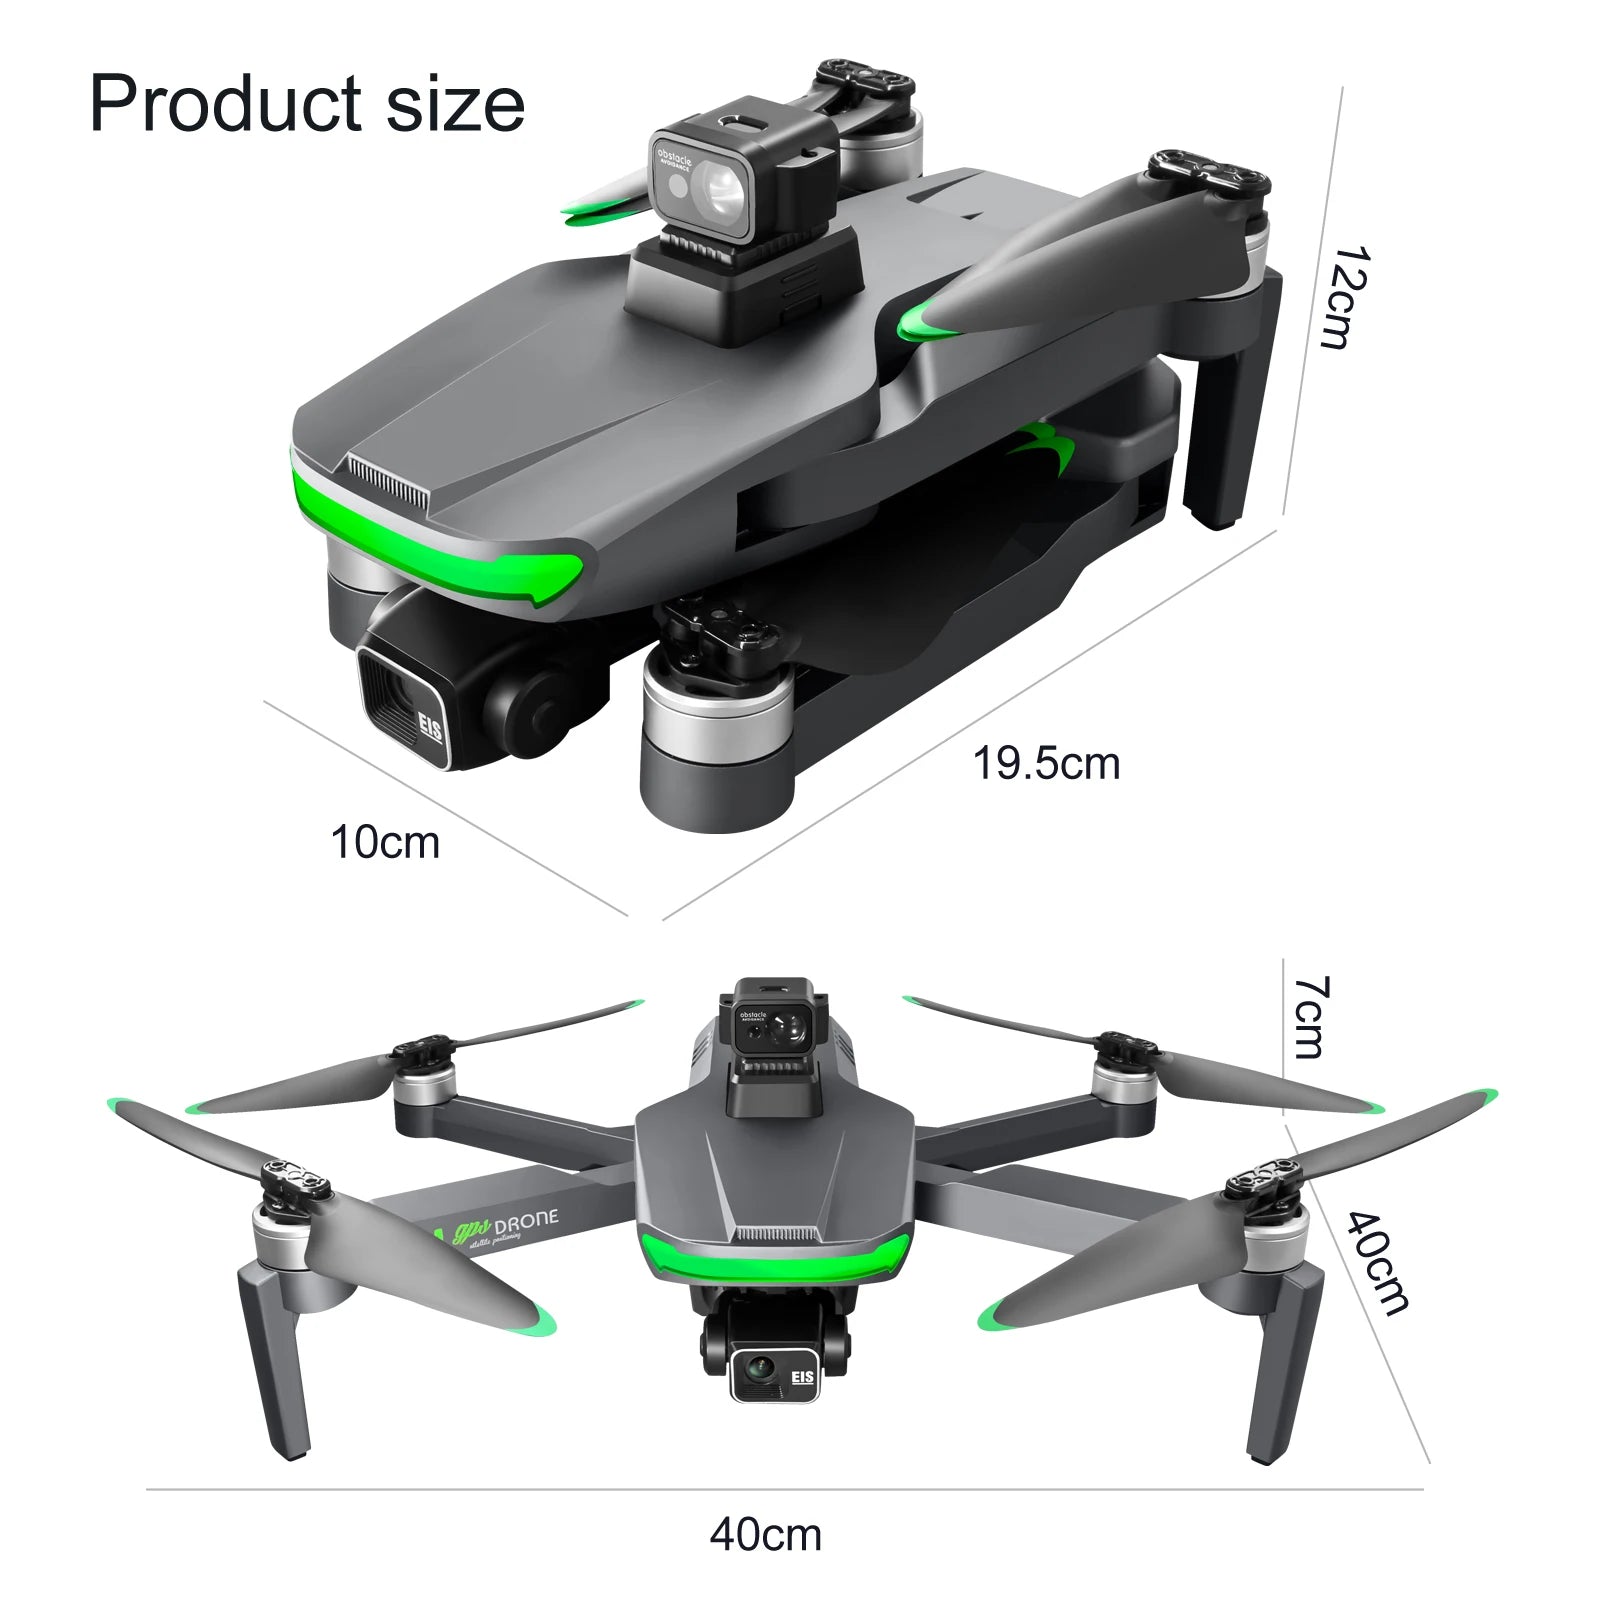 S155 Drone, Product size Fl' 19.5cm 1Ocm obslach 3 EIS 4